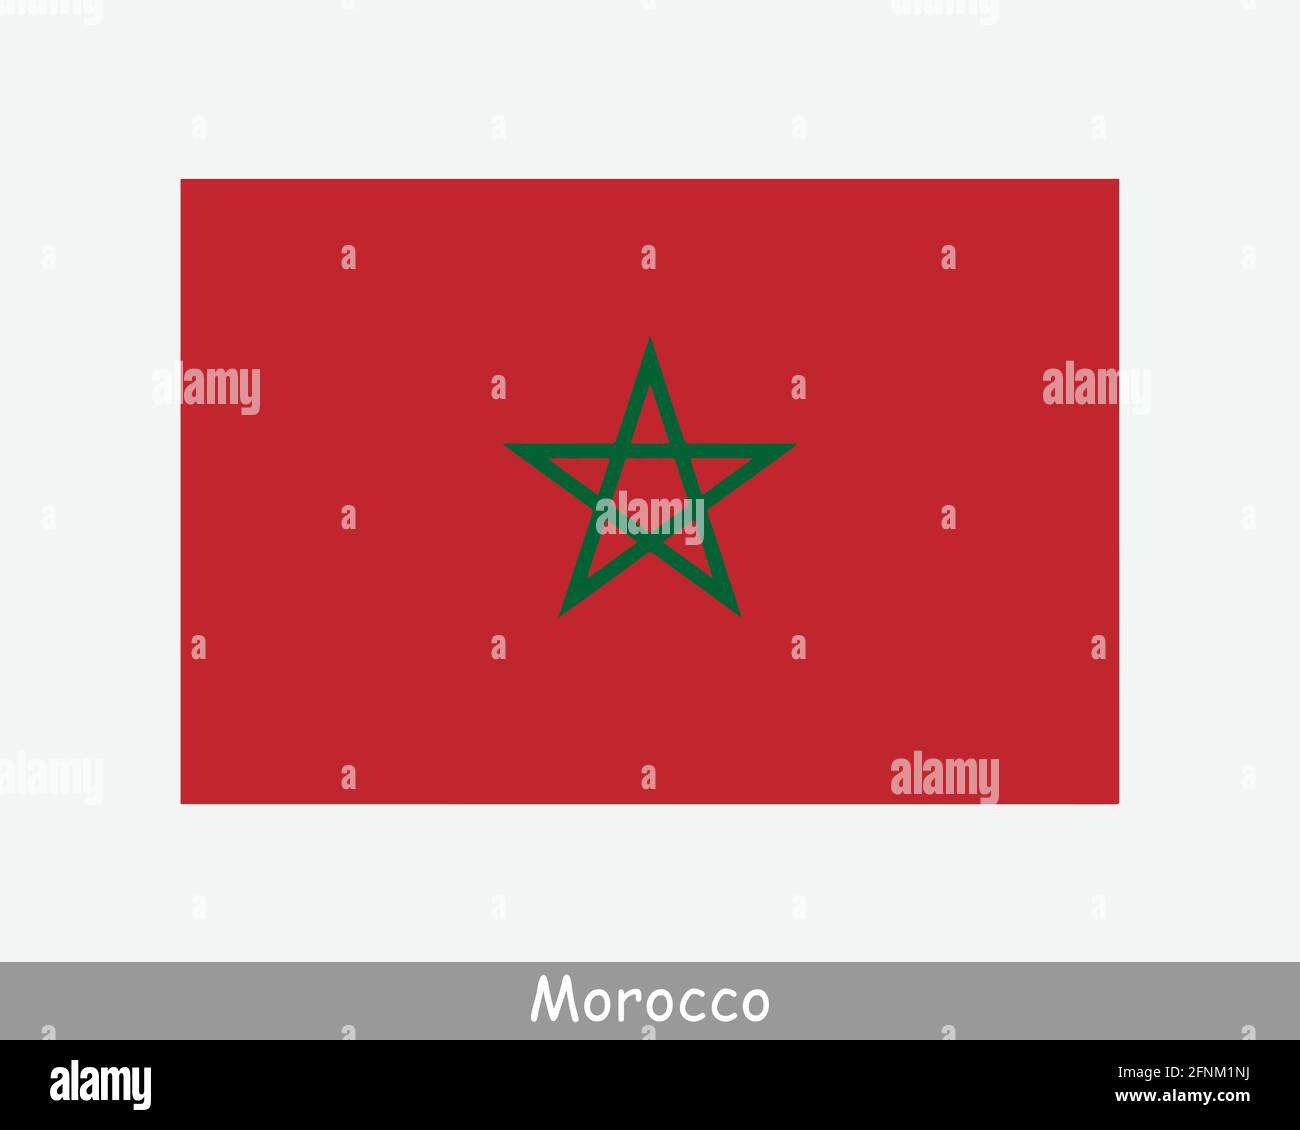 Nationale Flagge Marokkos. Marokkanische Landesflagge. Königreich Marokko detailliertes Banner. EPS-Vektorgrafik Datei ausschneiden Stock Vektor